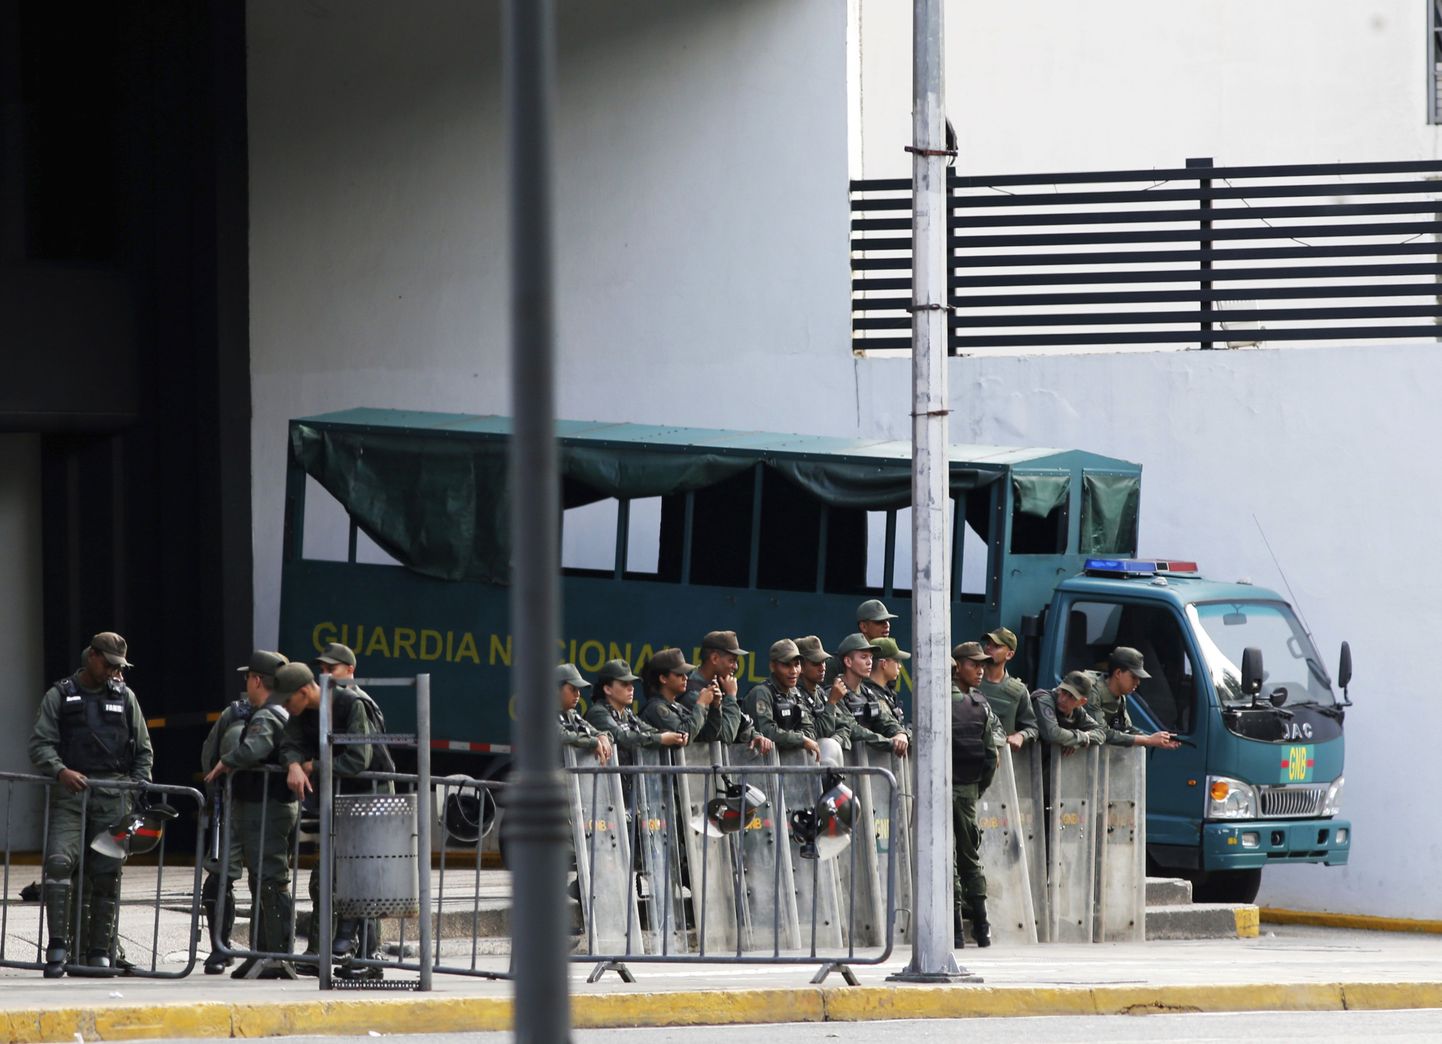 Venezuela sõjavägi prokuratuurihoonet ümbritsemas.